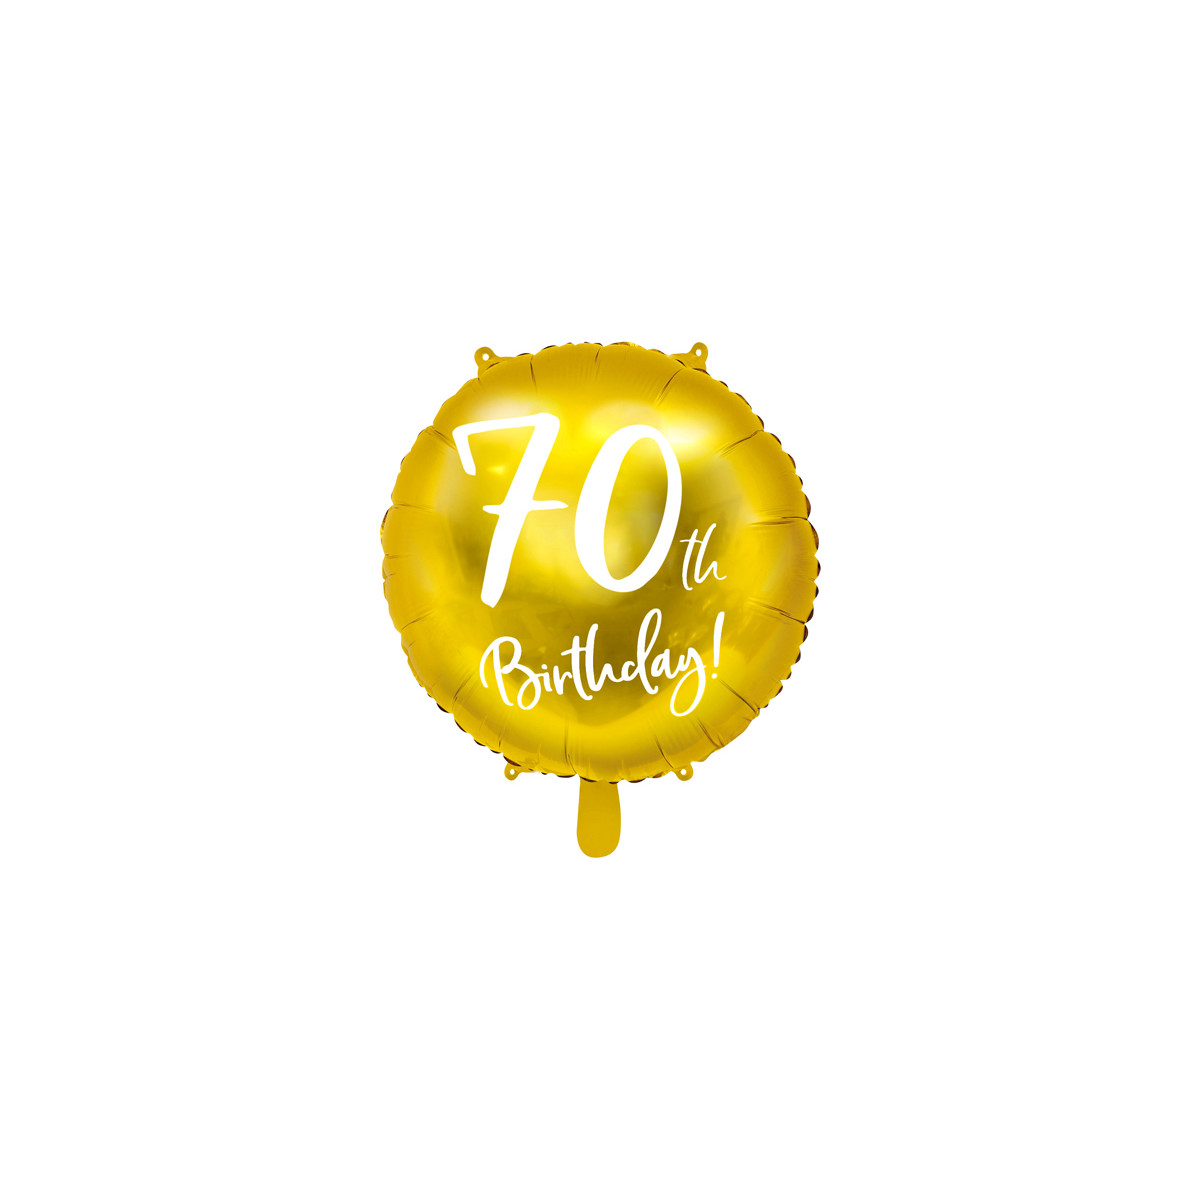 Ballon Anniversaire jaune gold 70 ans